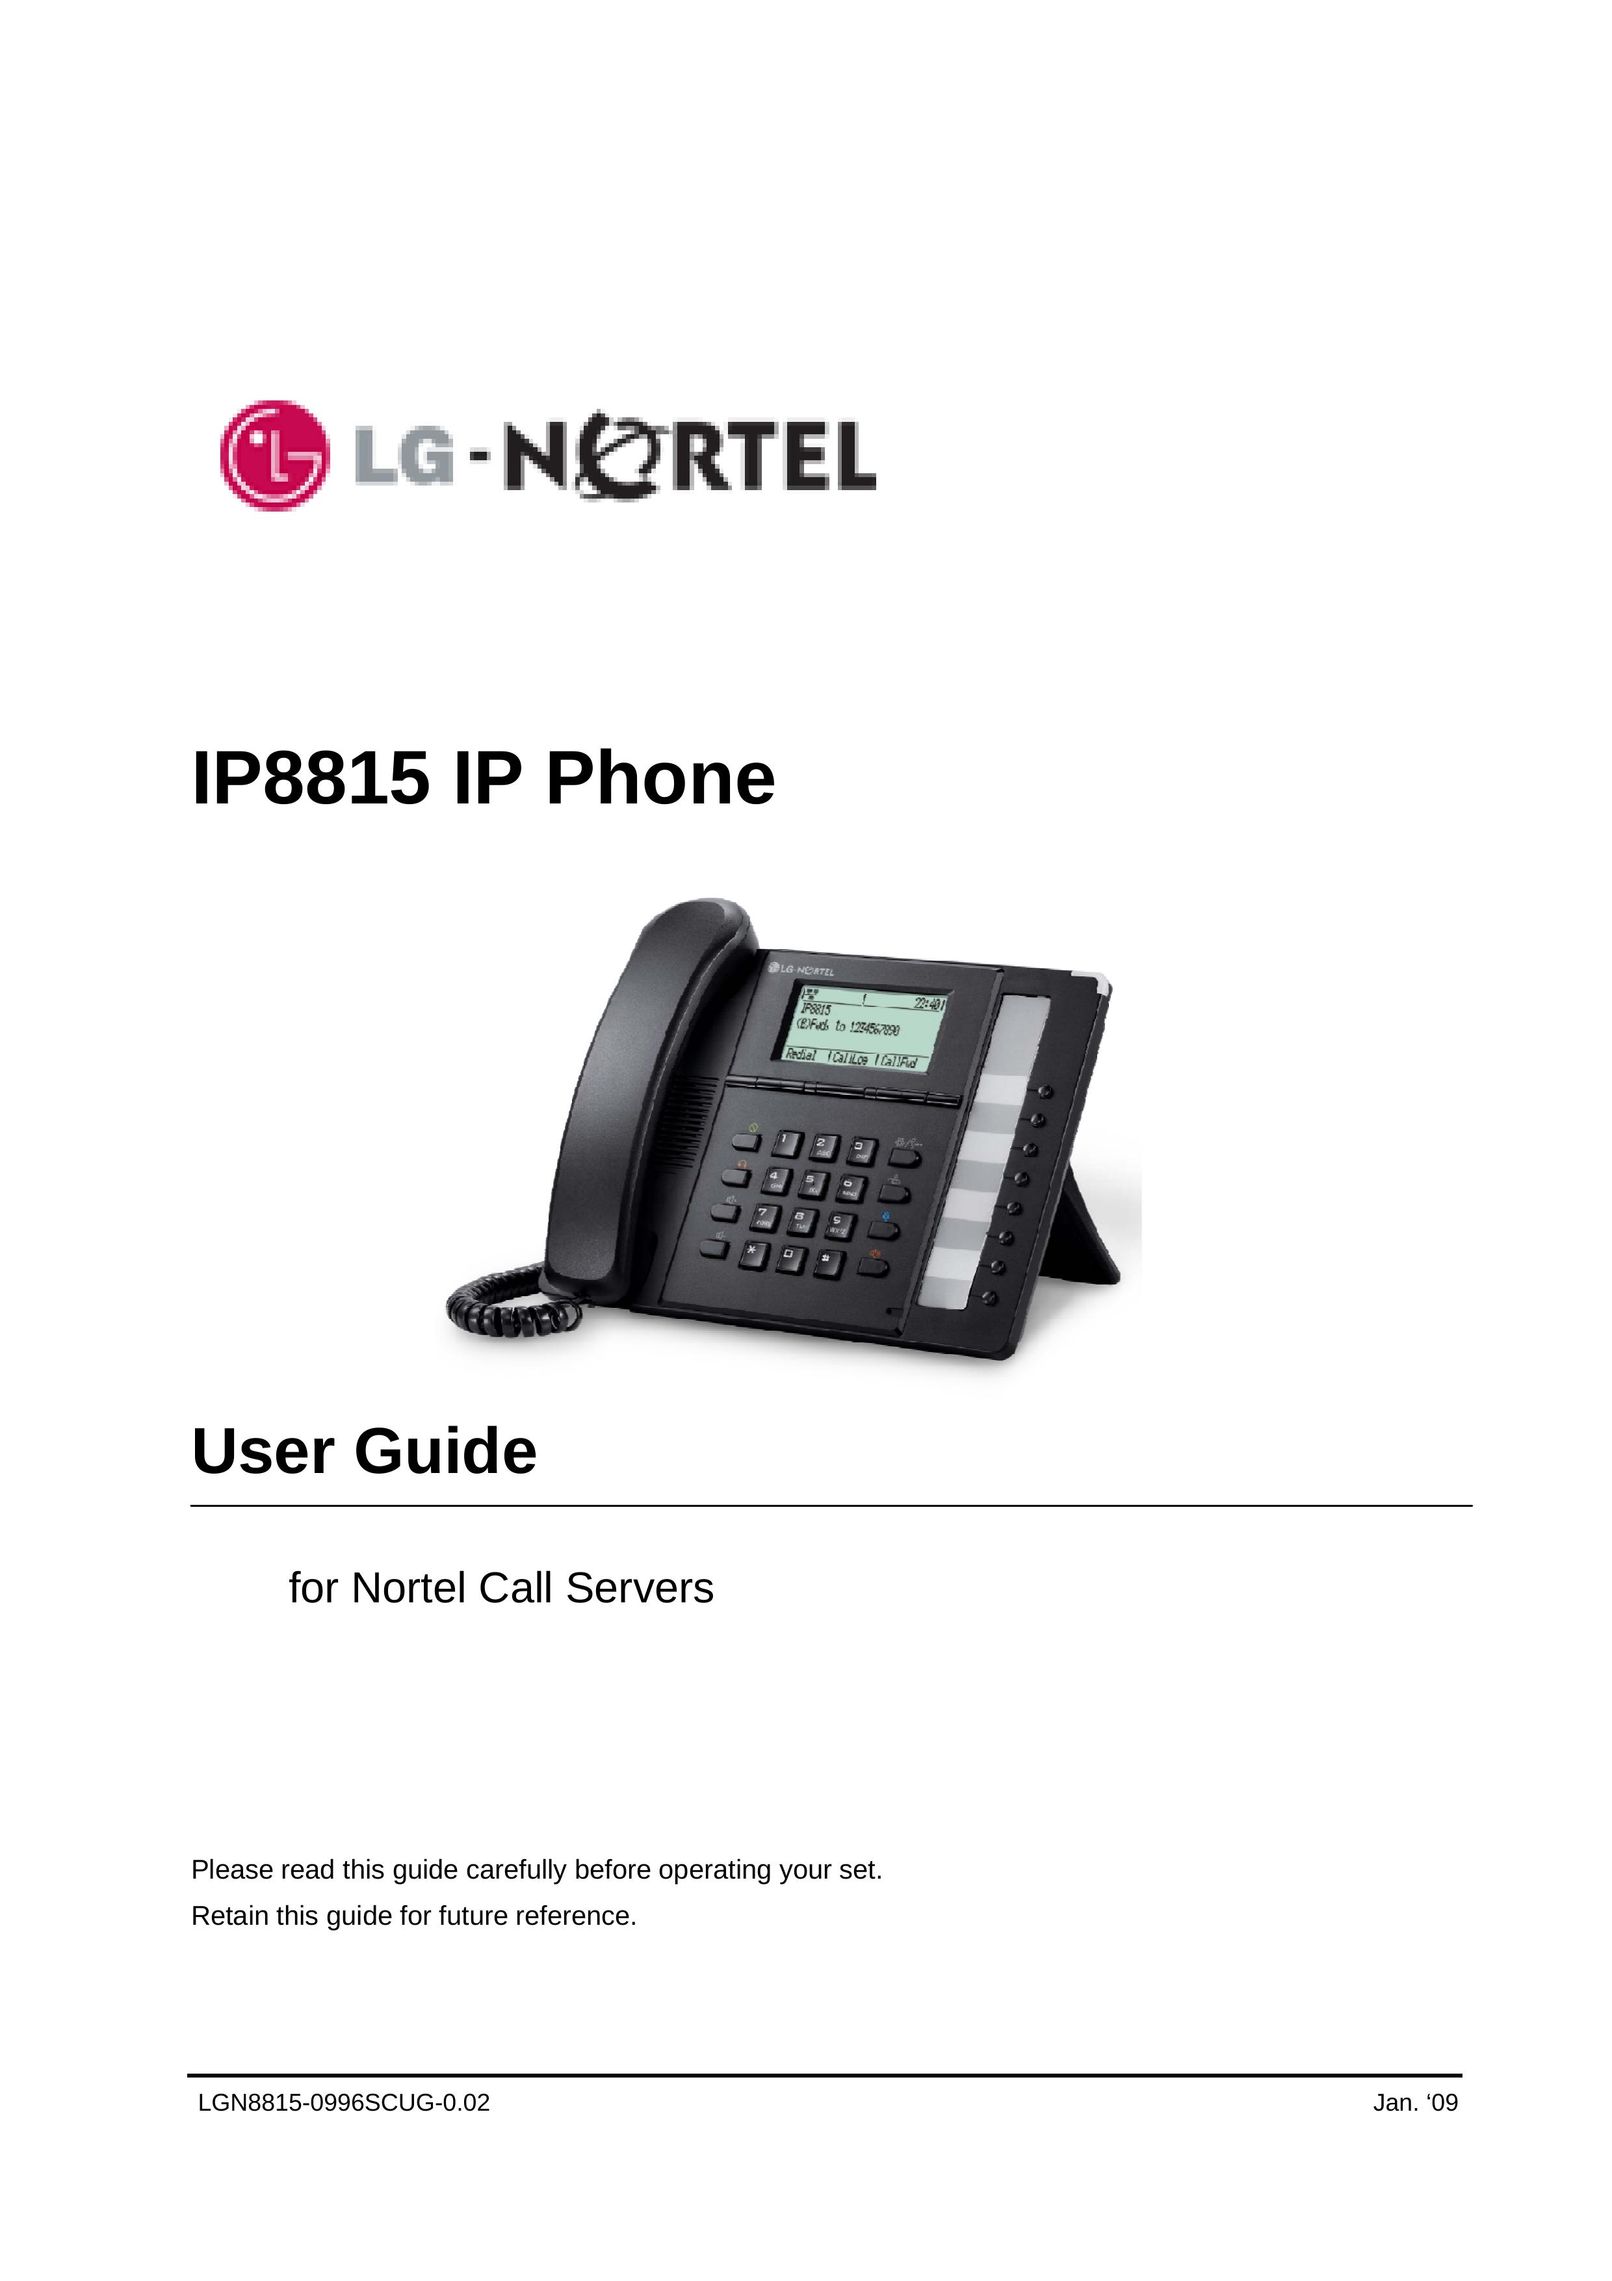 Minolta IP8815 IP Phone User Manual